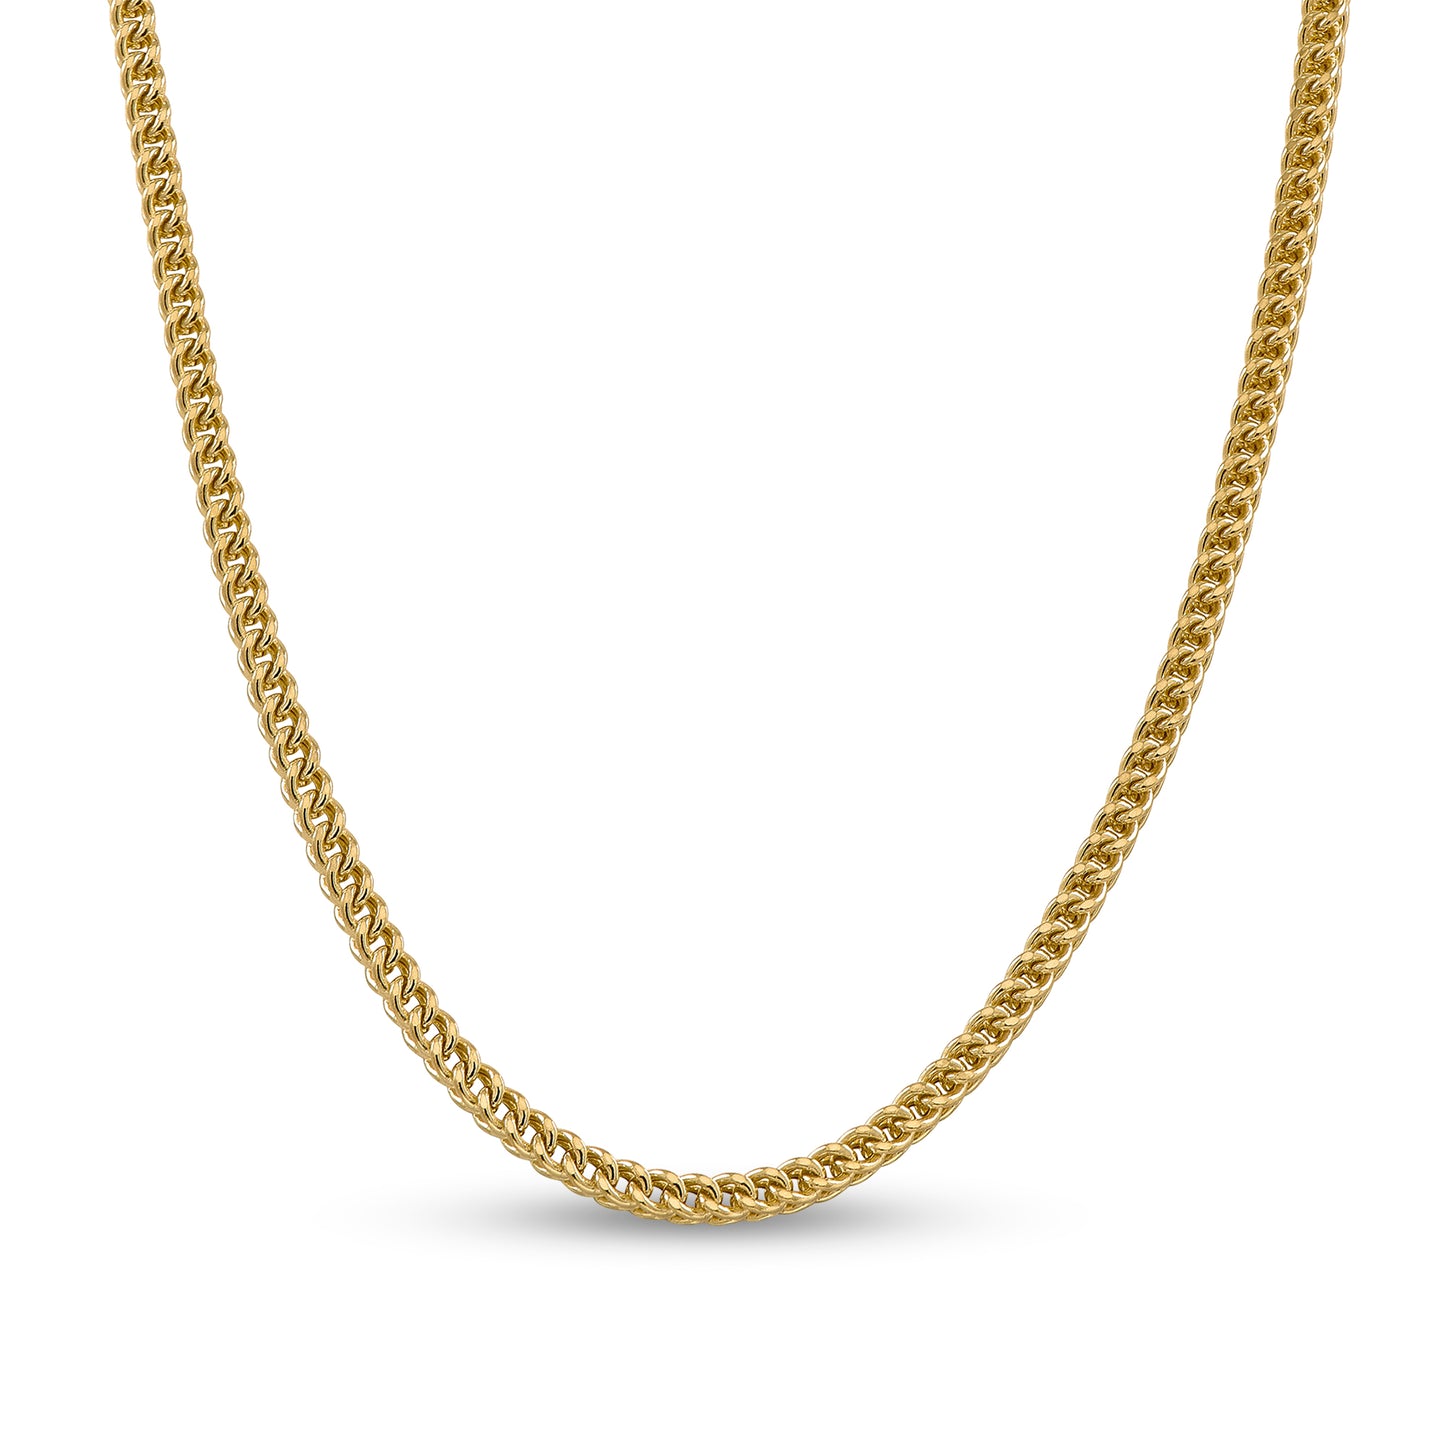 10k yellow gold franco chain -jewelry